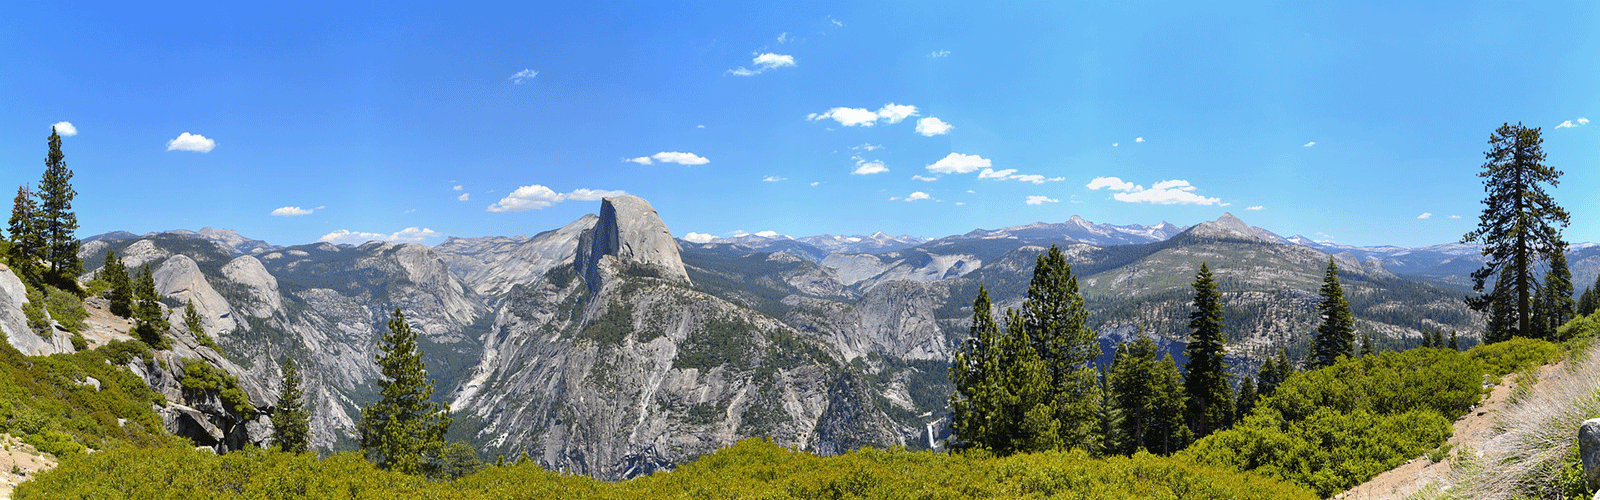 view of Yosemite range including half dome